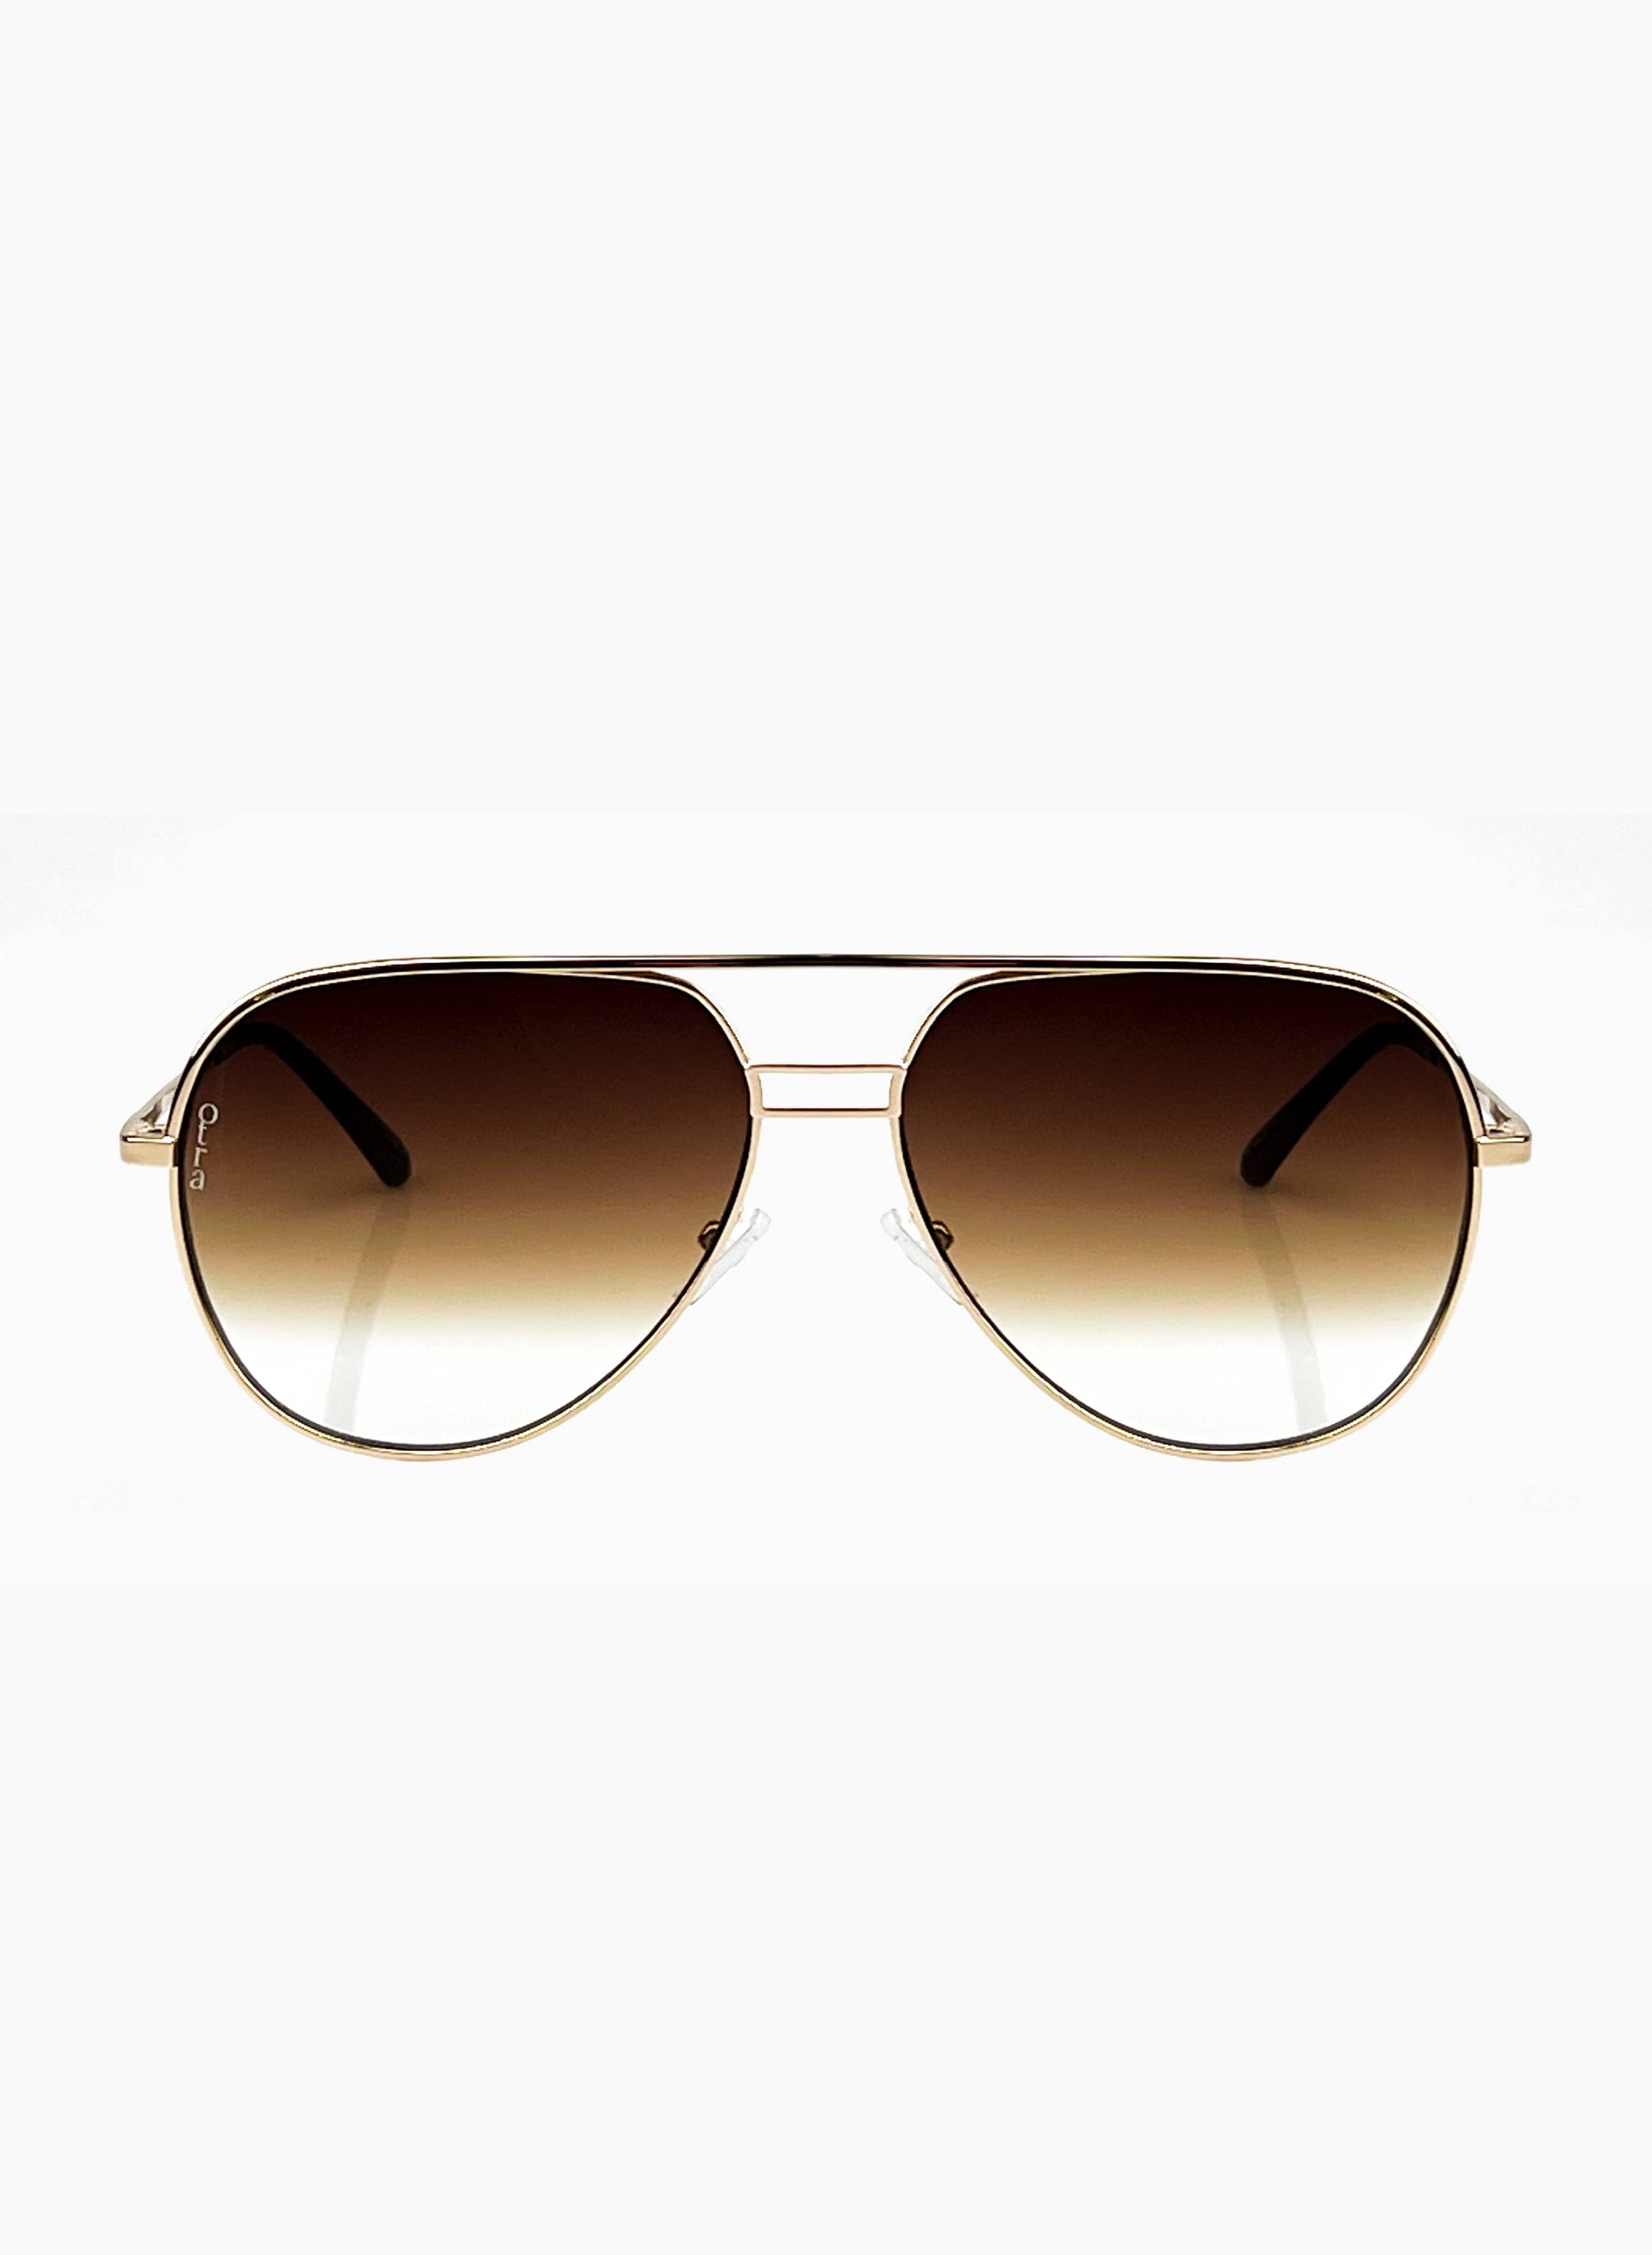 Transit aviator sunglasses in brown